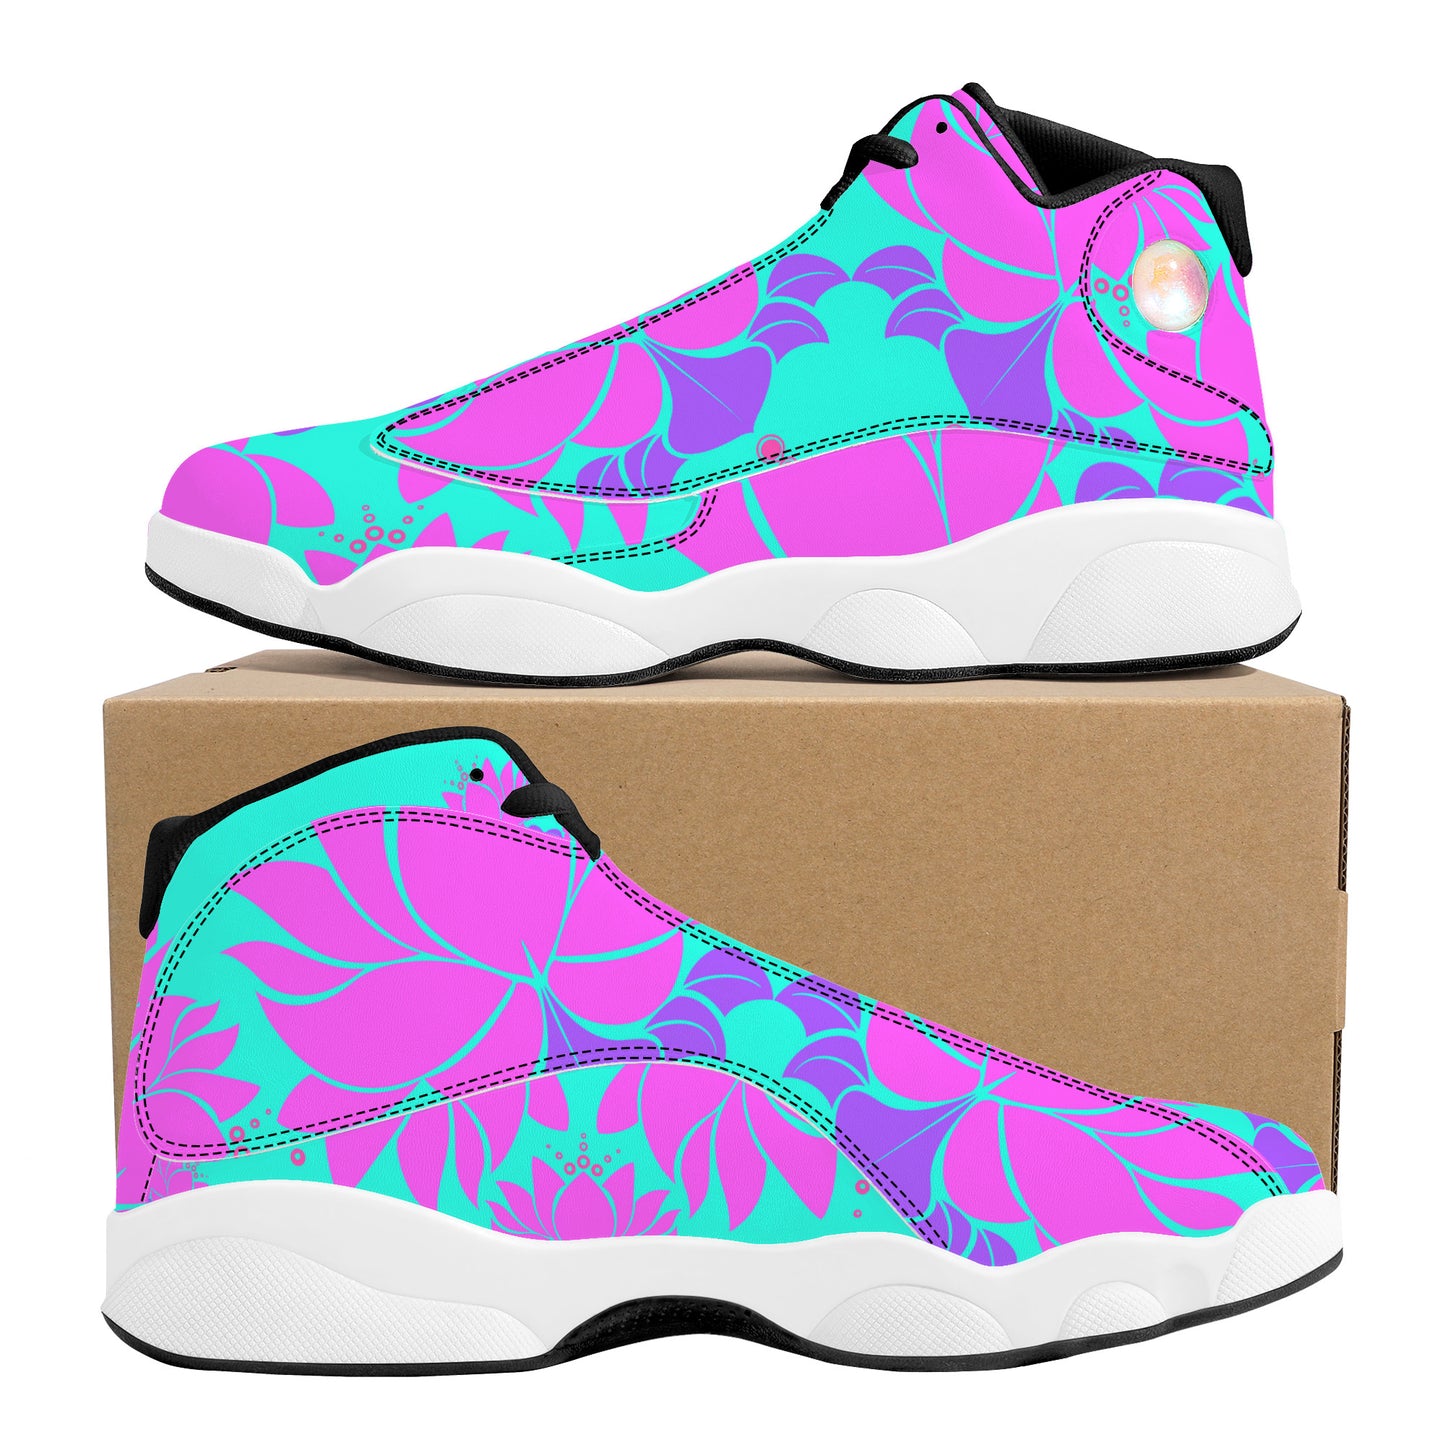 "Lotus" Basketball Shoes